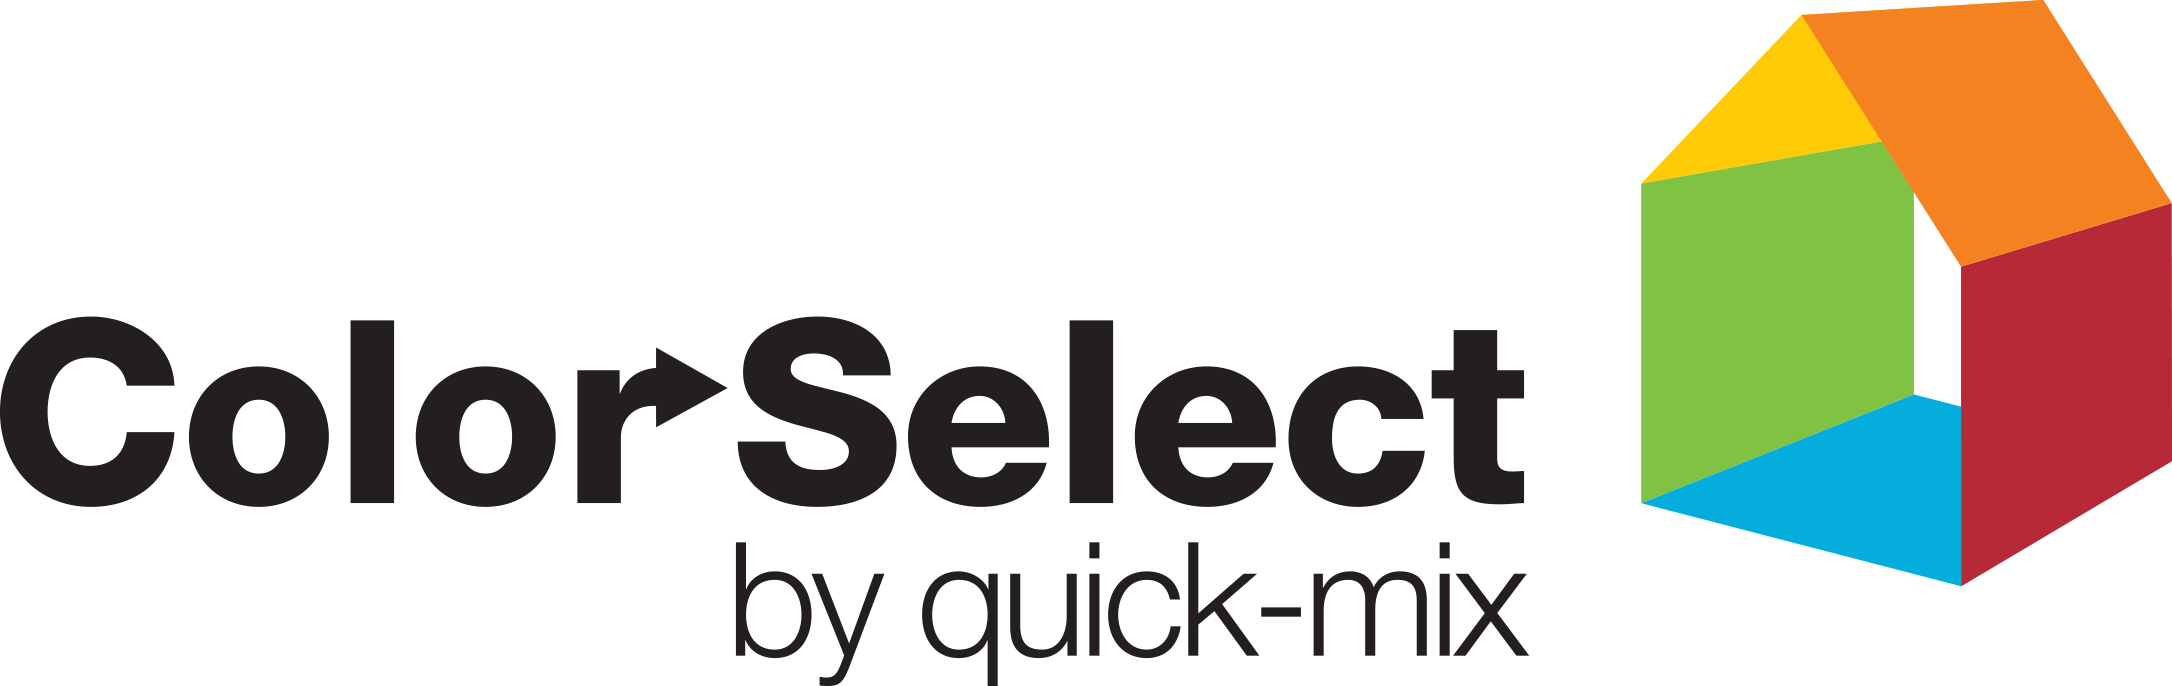 ColorSelect logo